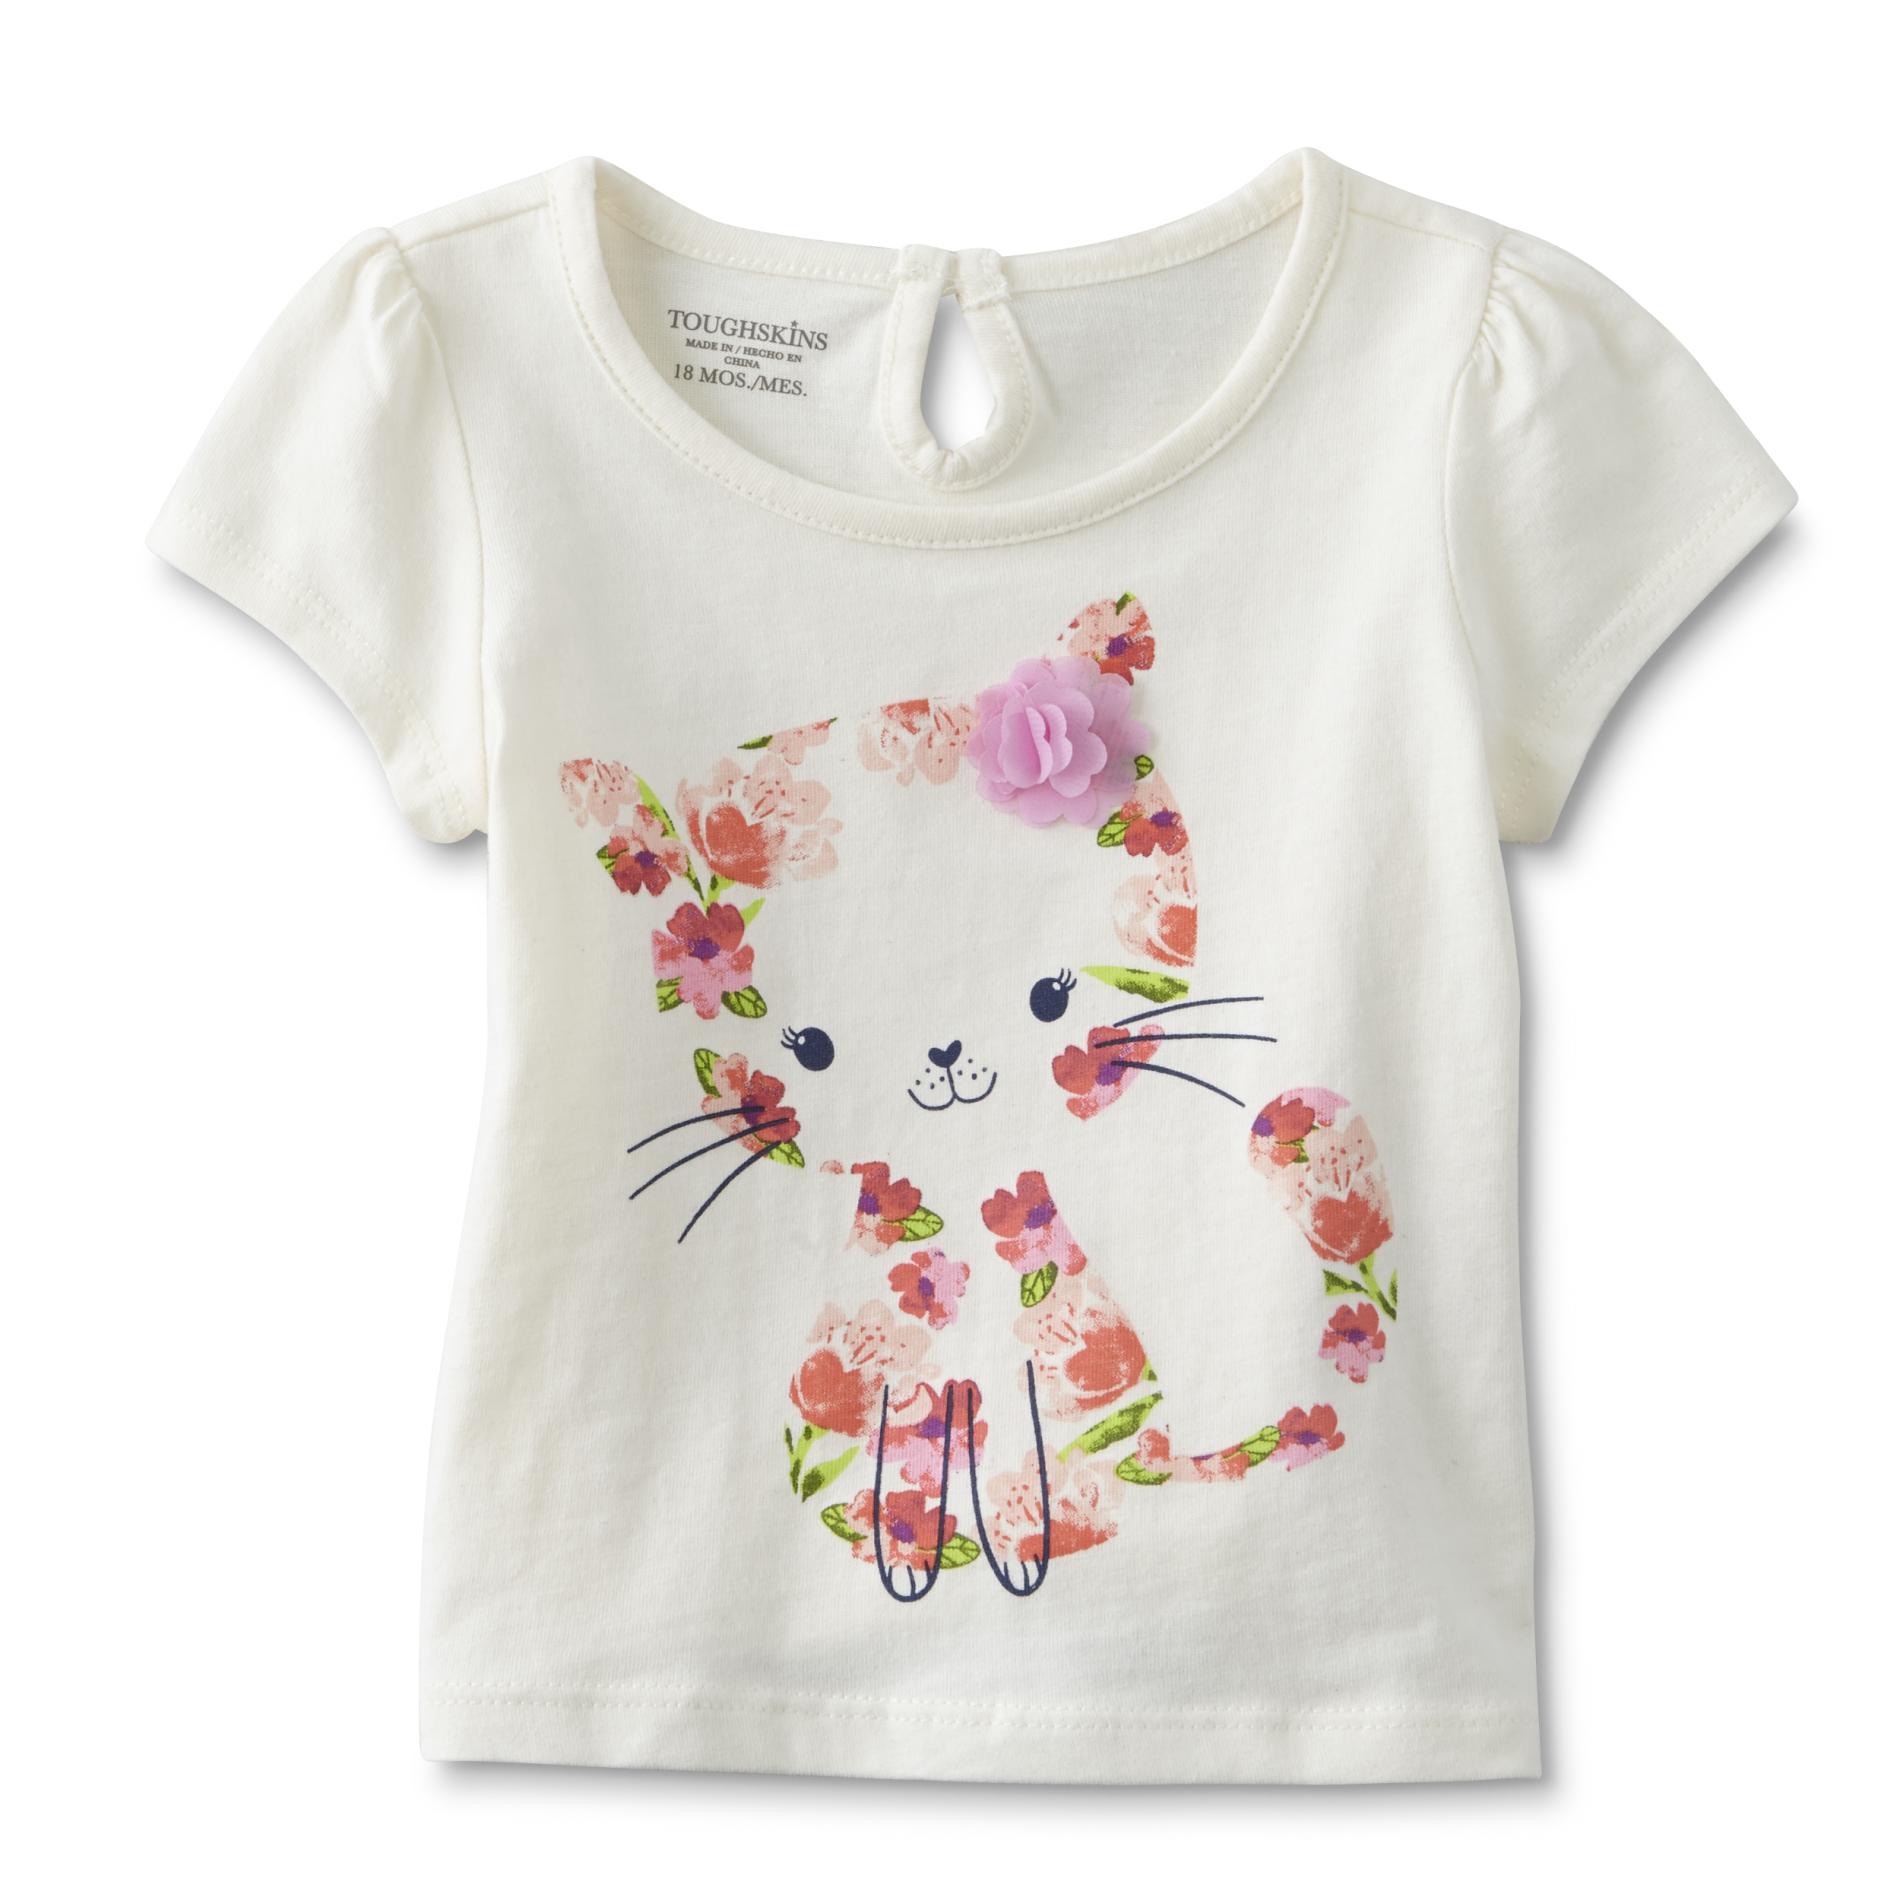 Toughskins Infant & Toddler Girls' Graphic T-Shirt - Floral Cat